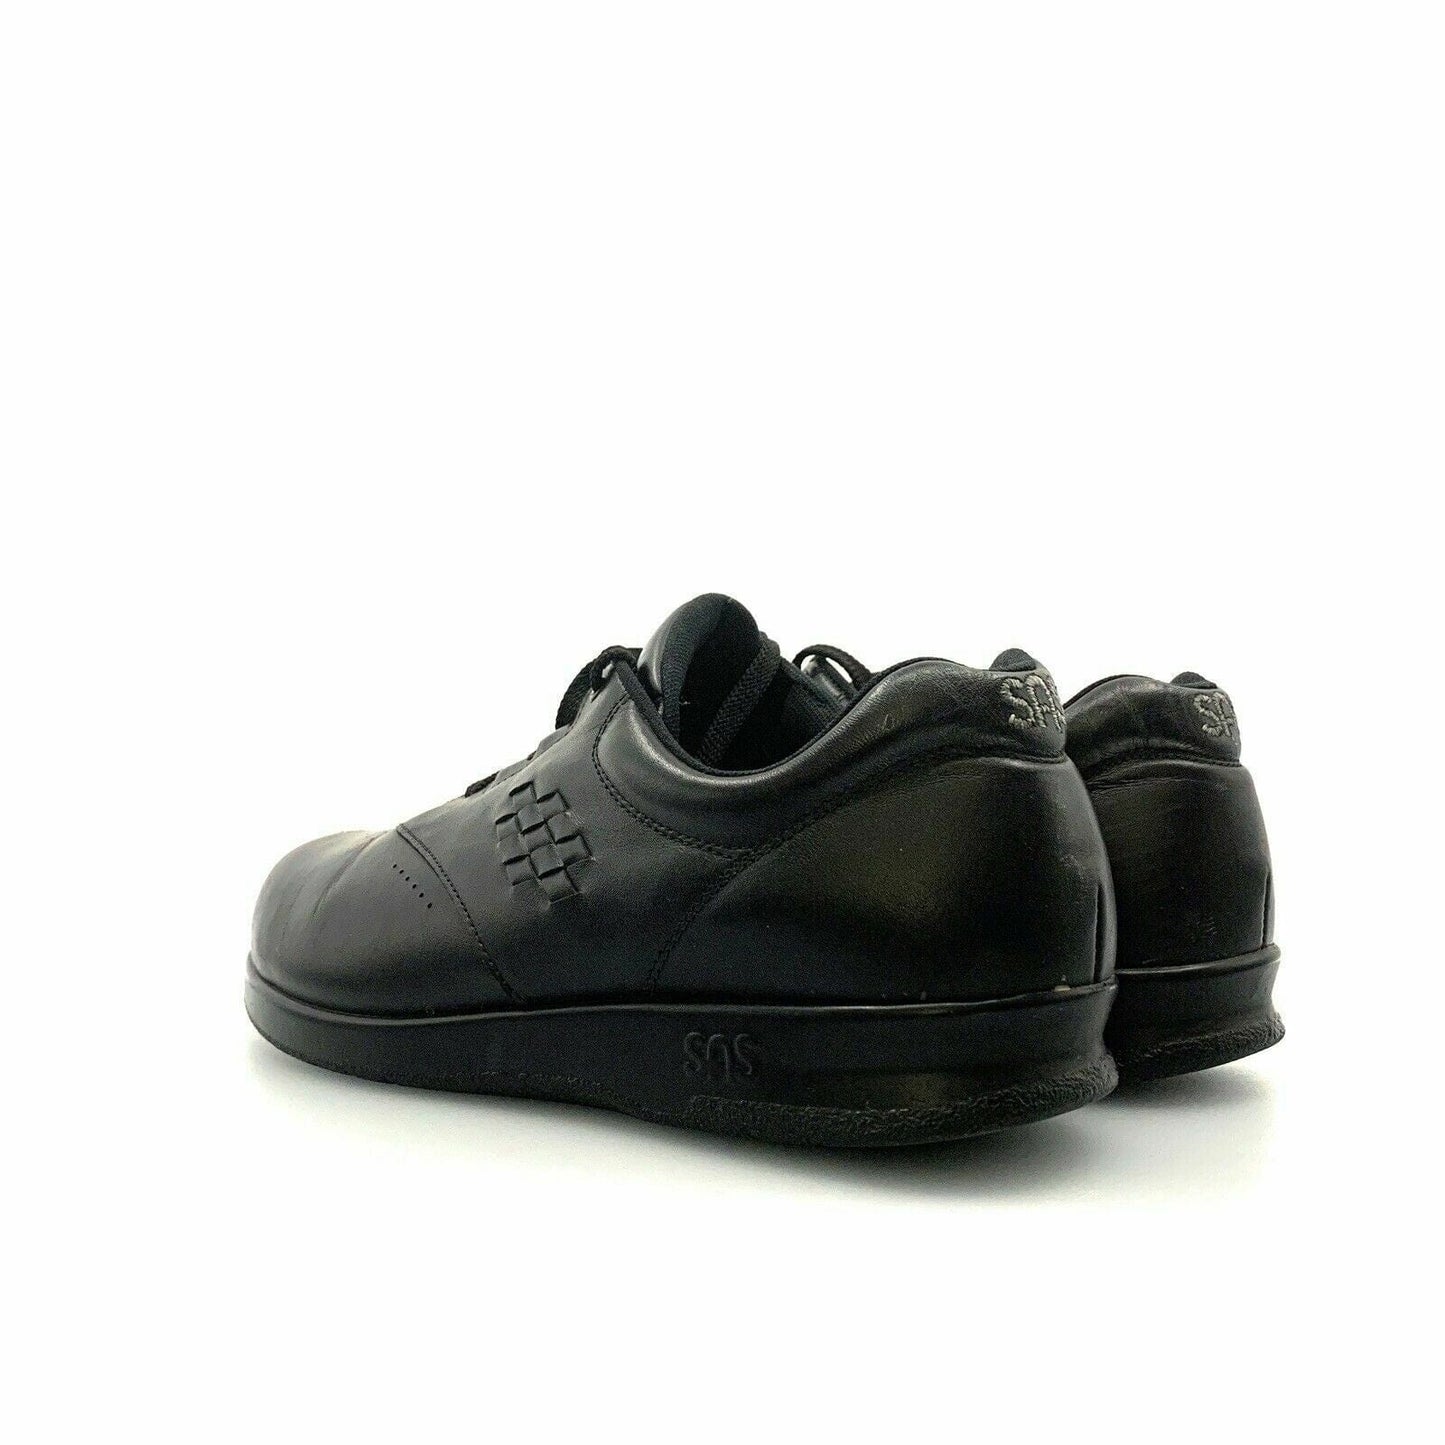 SAS Womens Size 9.5M Black Free Time Lace Up Diabetic Shoes Walking Comfort